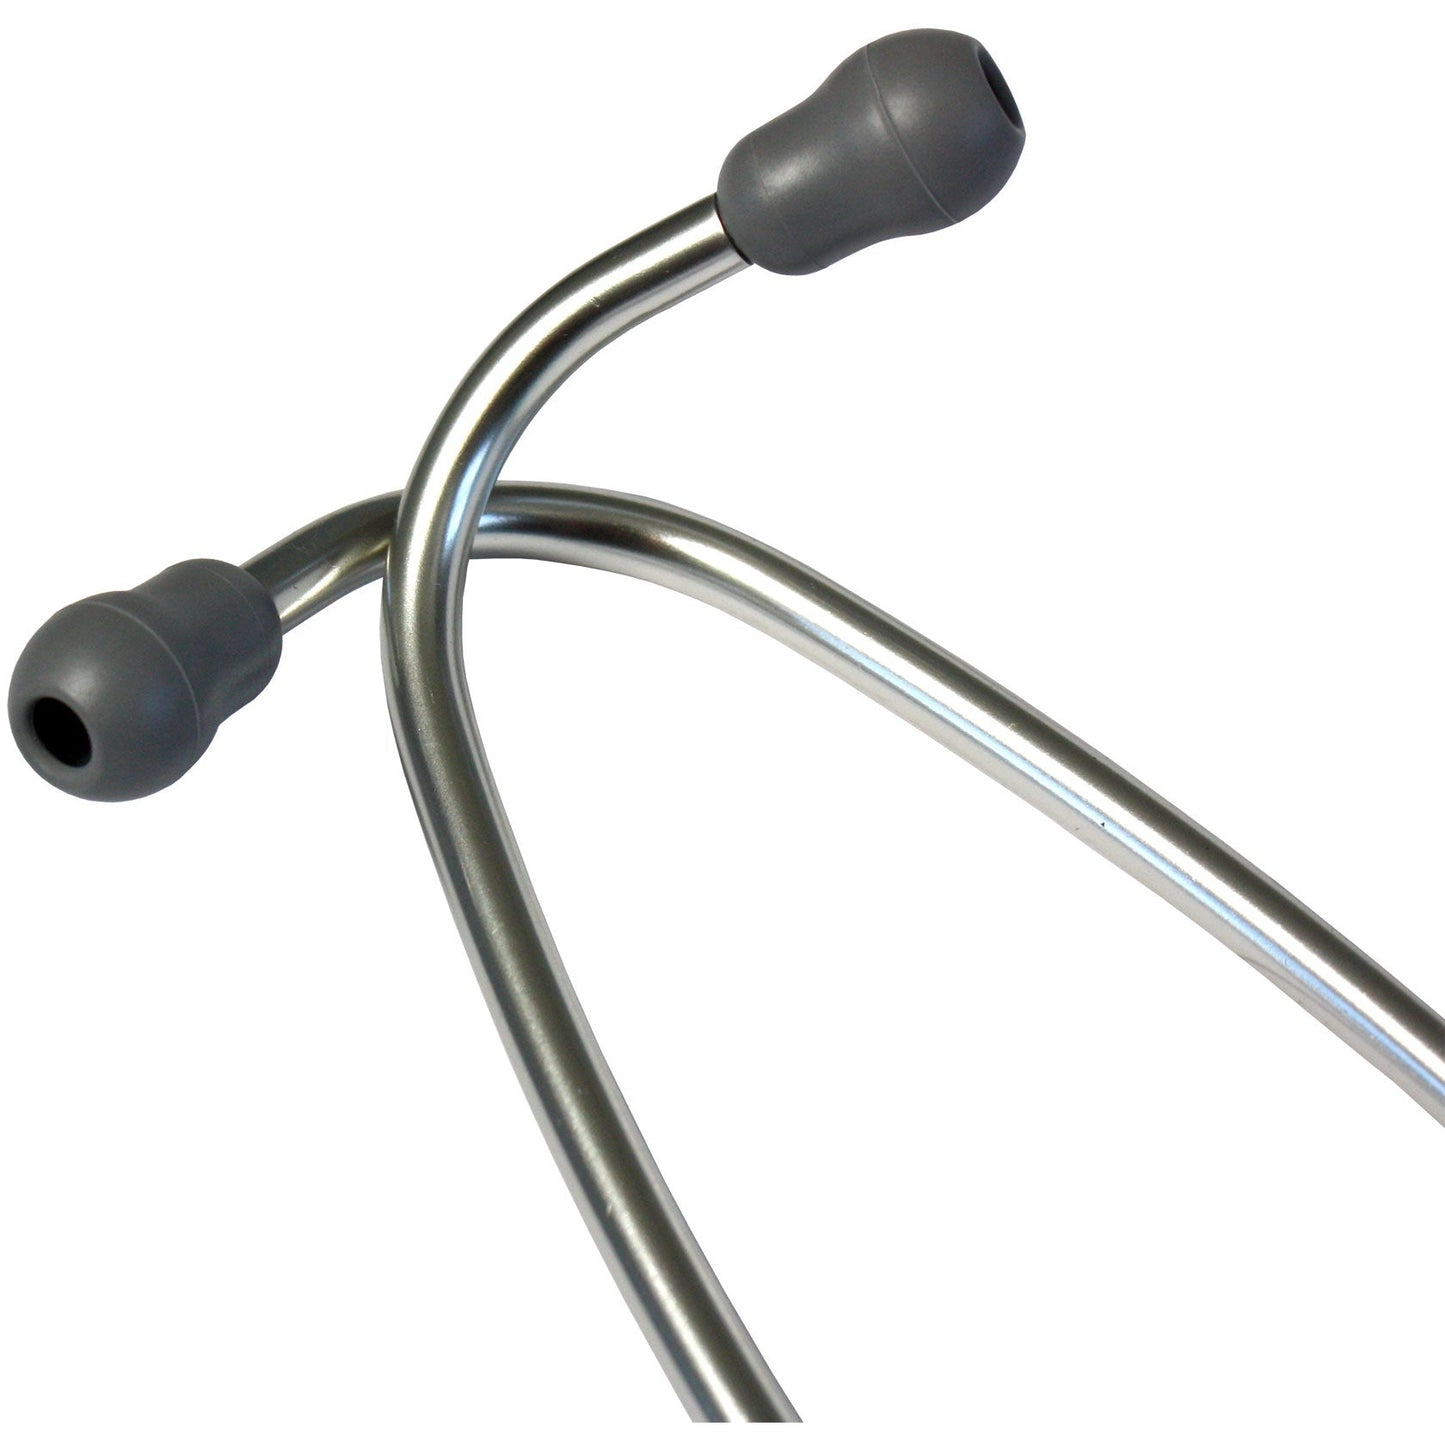 3M Littmann Classic II Paediatric Stethoscope: Caribbean Blue 2119